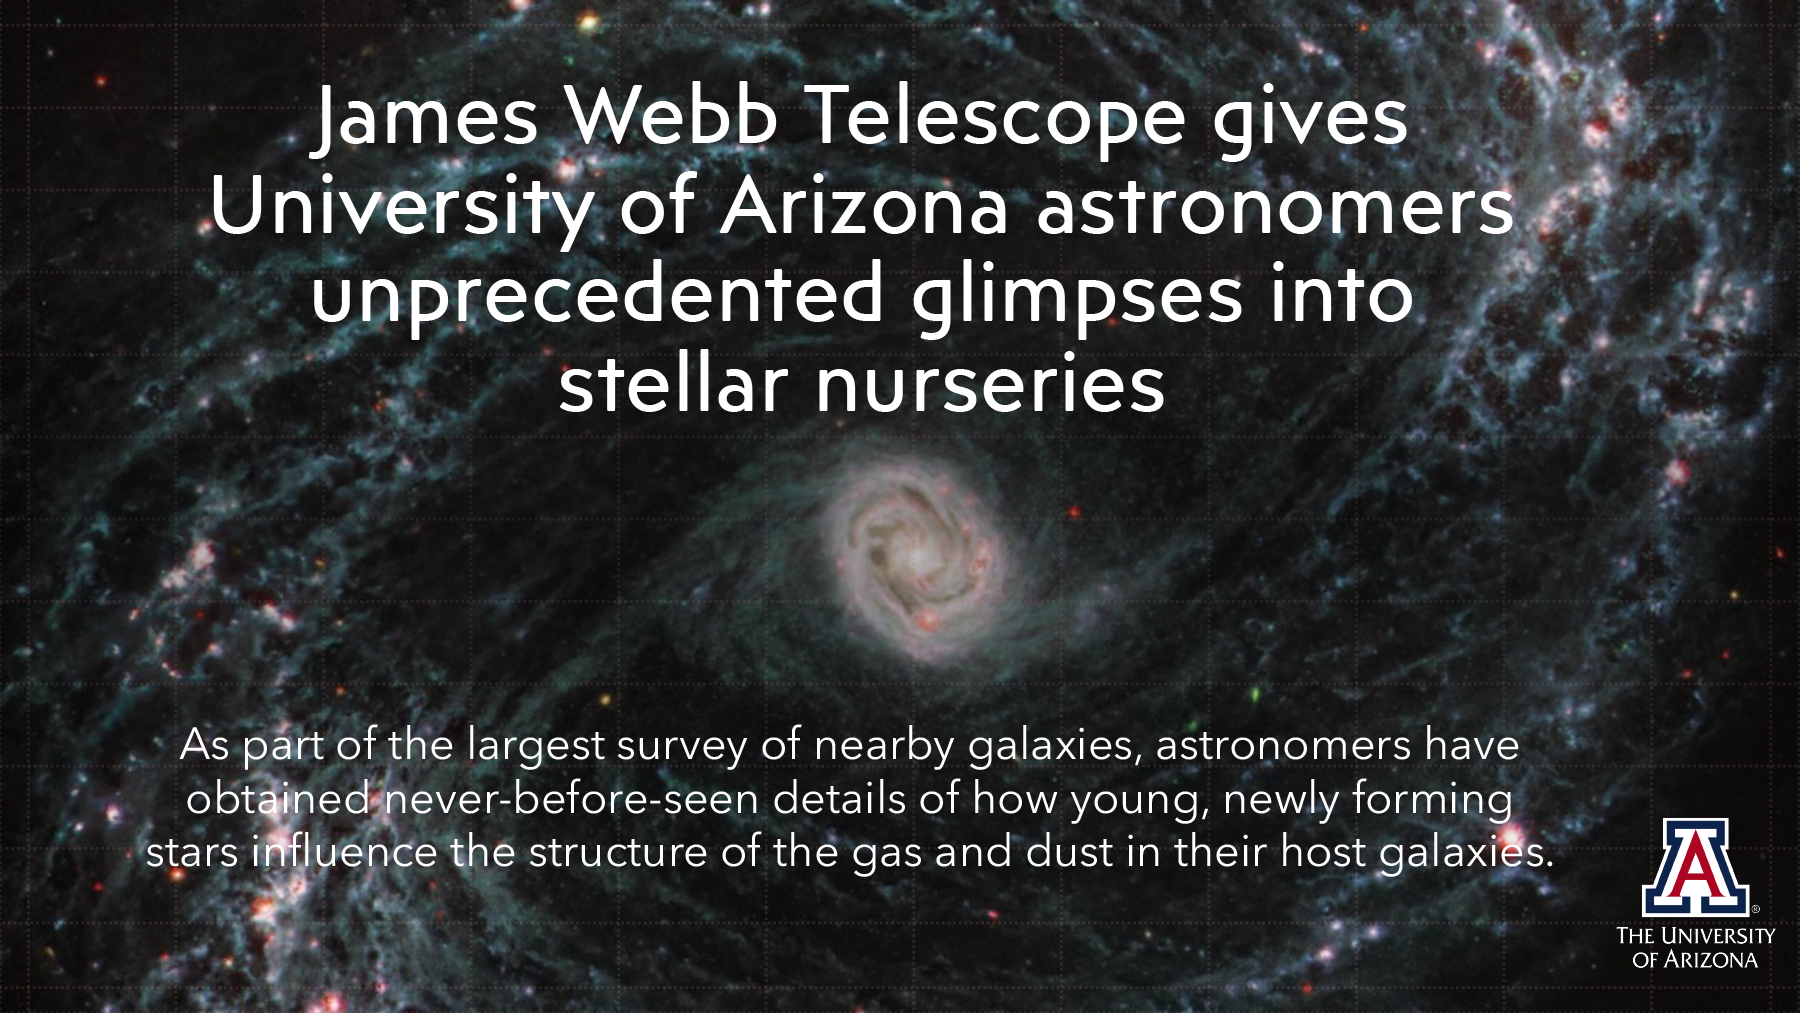 James Webb Telescope gives UArizona astronomers glimpses into stellar nurseries